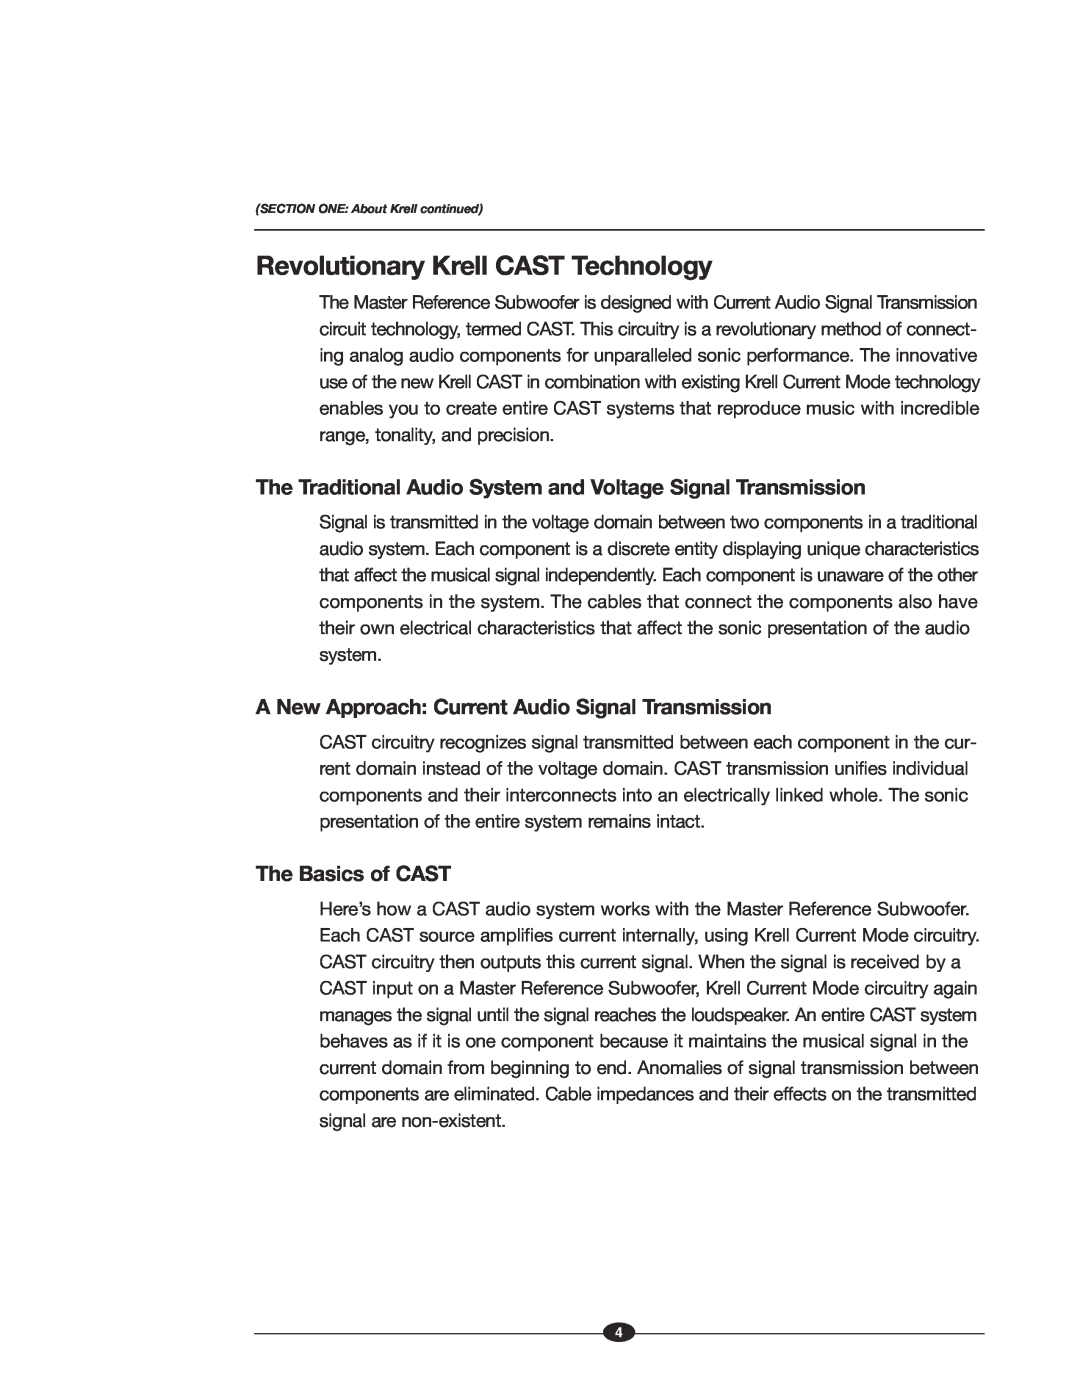 Krell Industries MASTER REFERENCE SUBWOOFER manual Revolutionary Krell CAST Technology, The Basics of CAST 